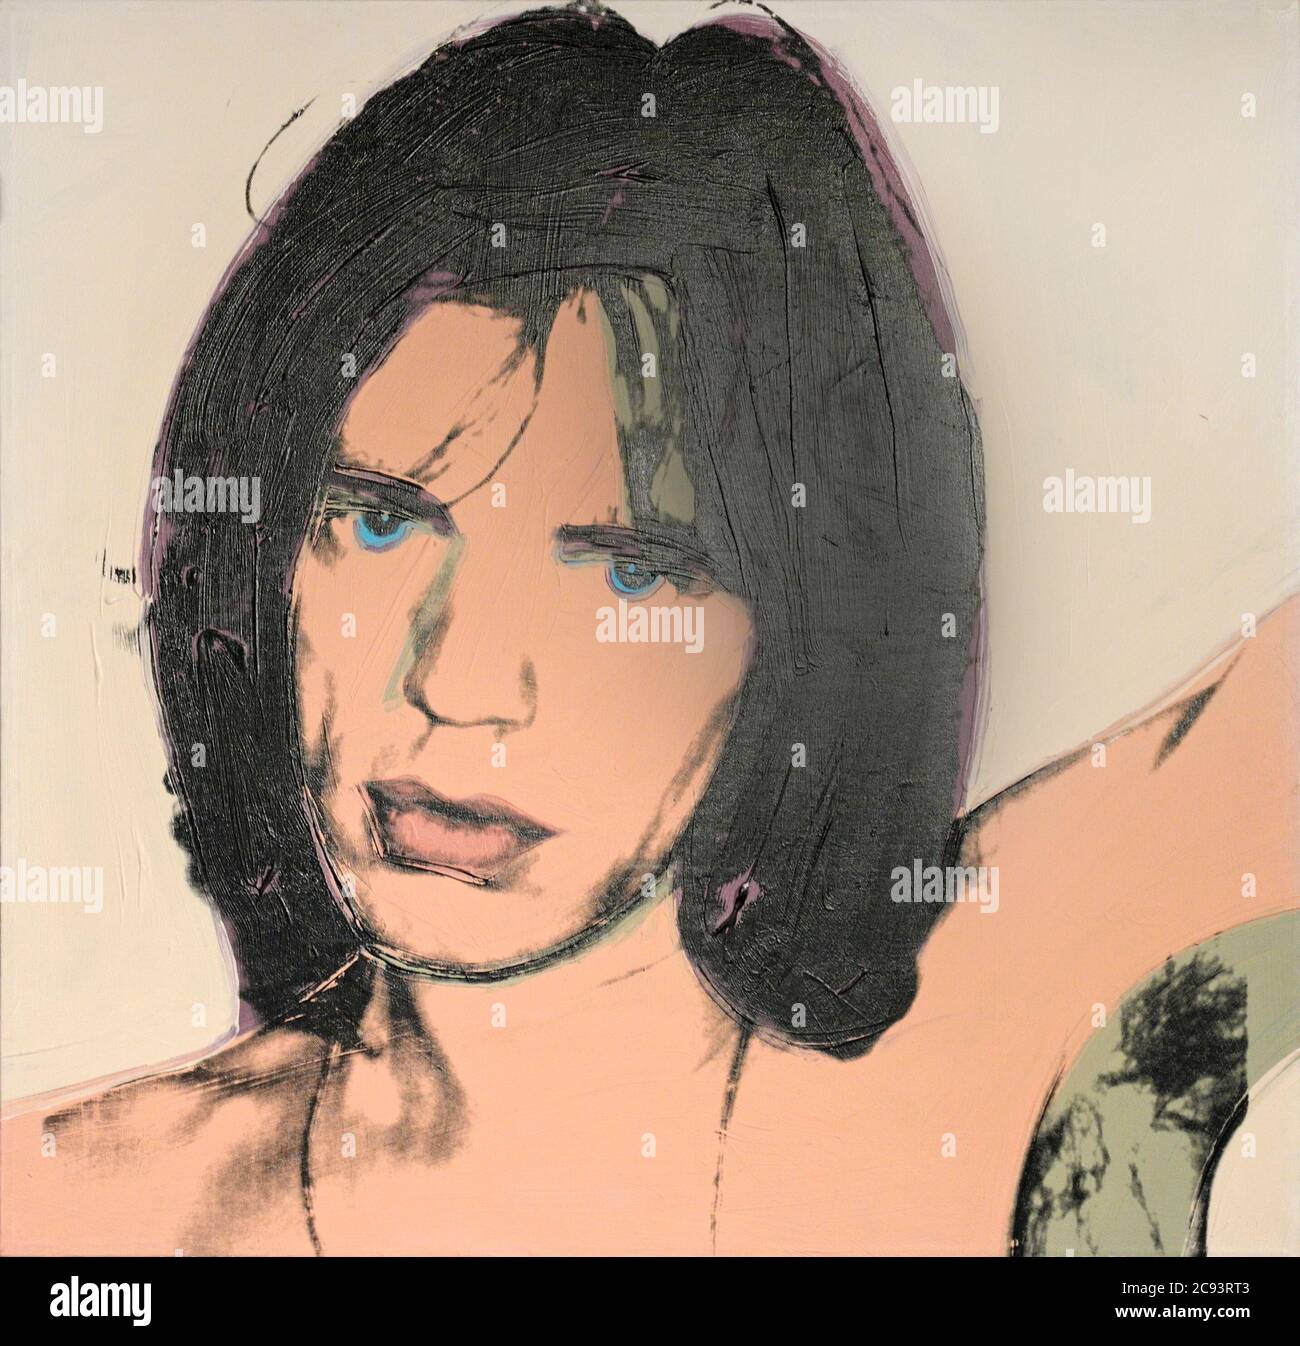 Mick Jagger portrait, Andy Warhol Stock Photo